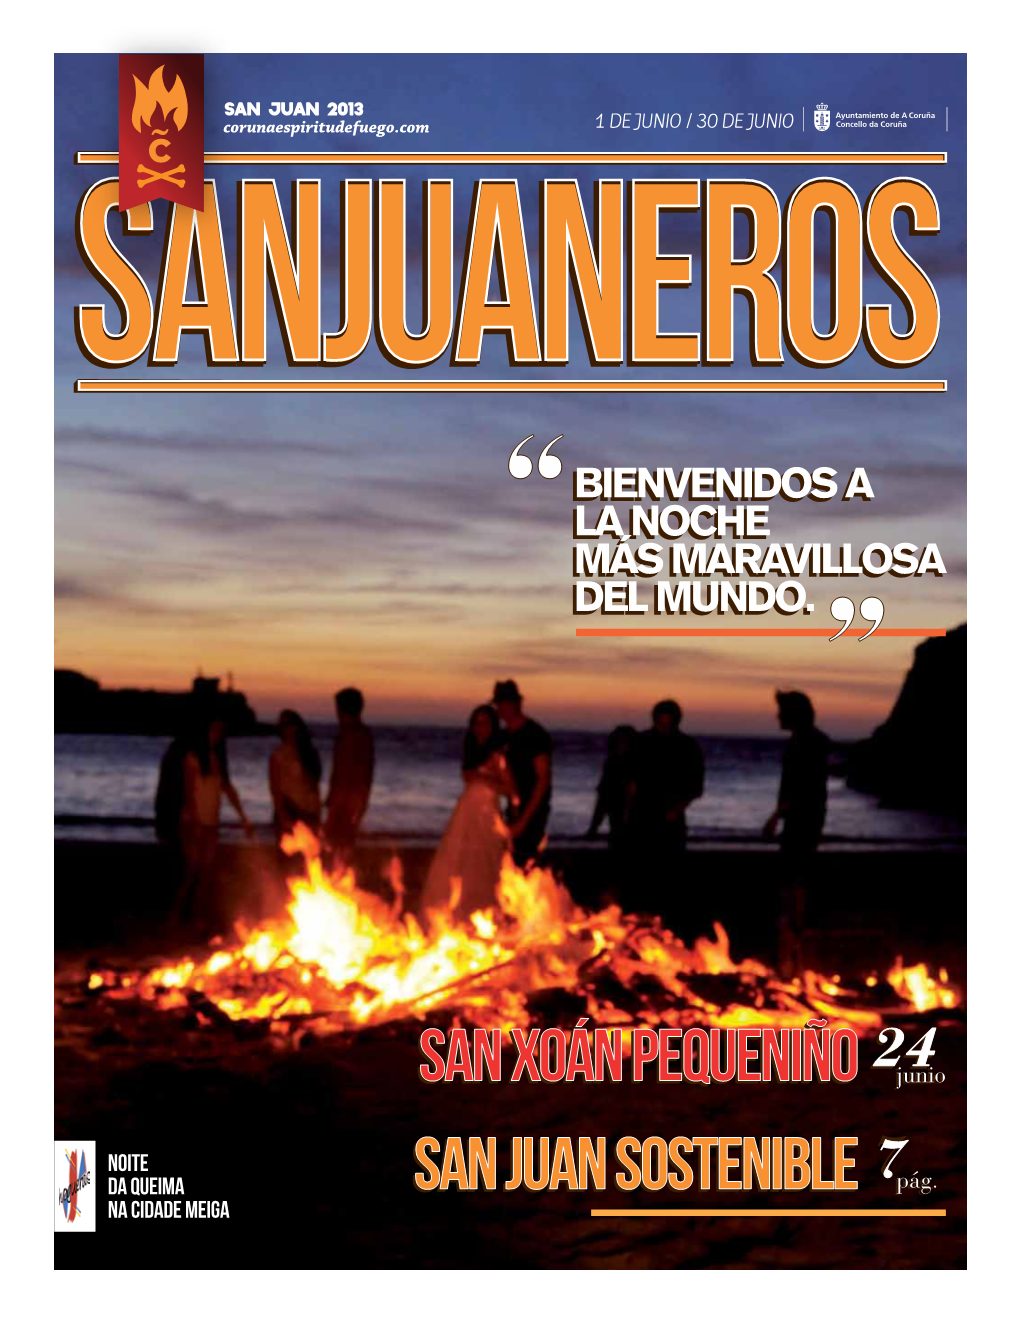 San Juan Sostenible San Juan Sostenible San Xoán Pequeniño24